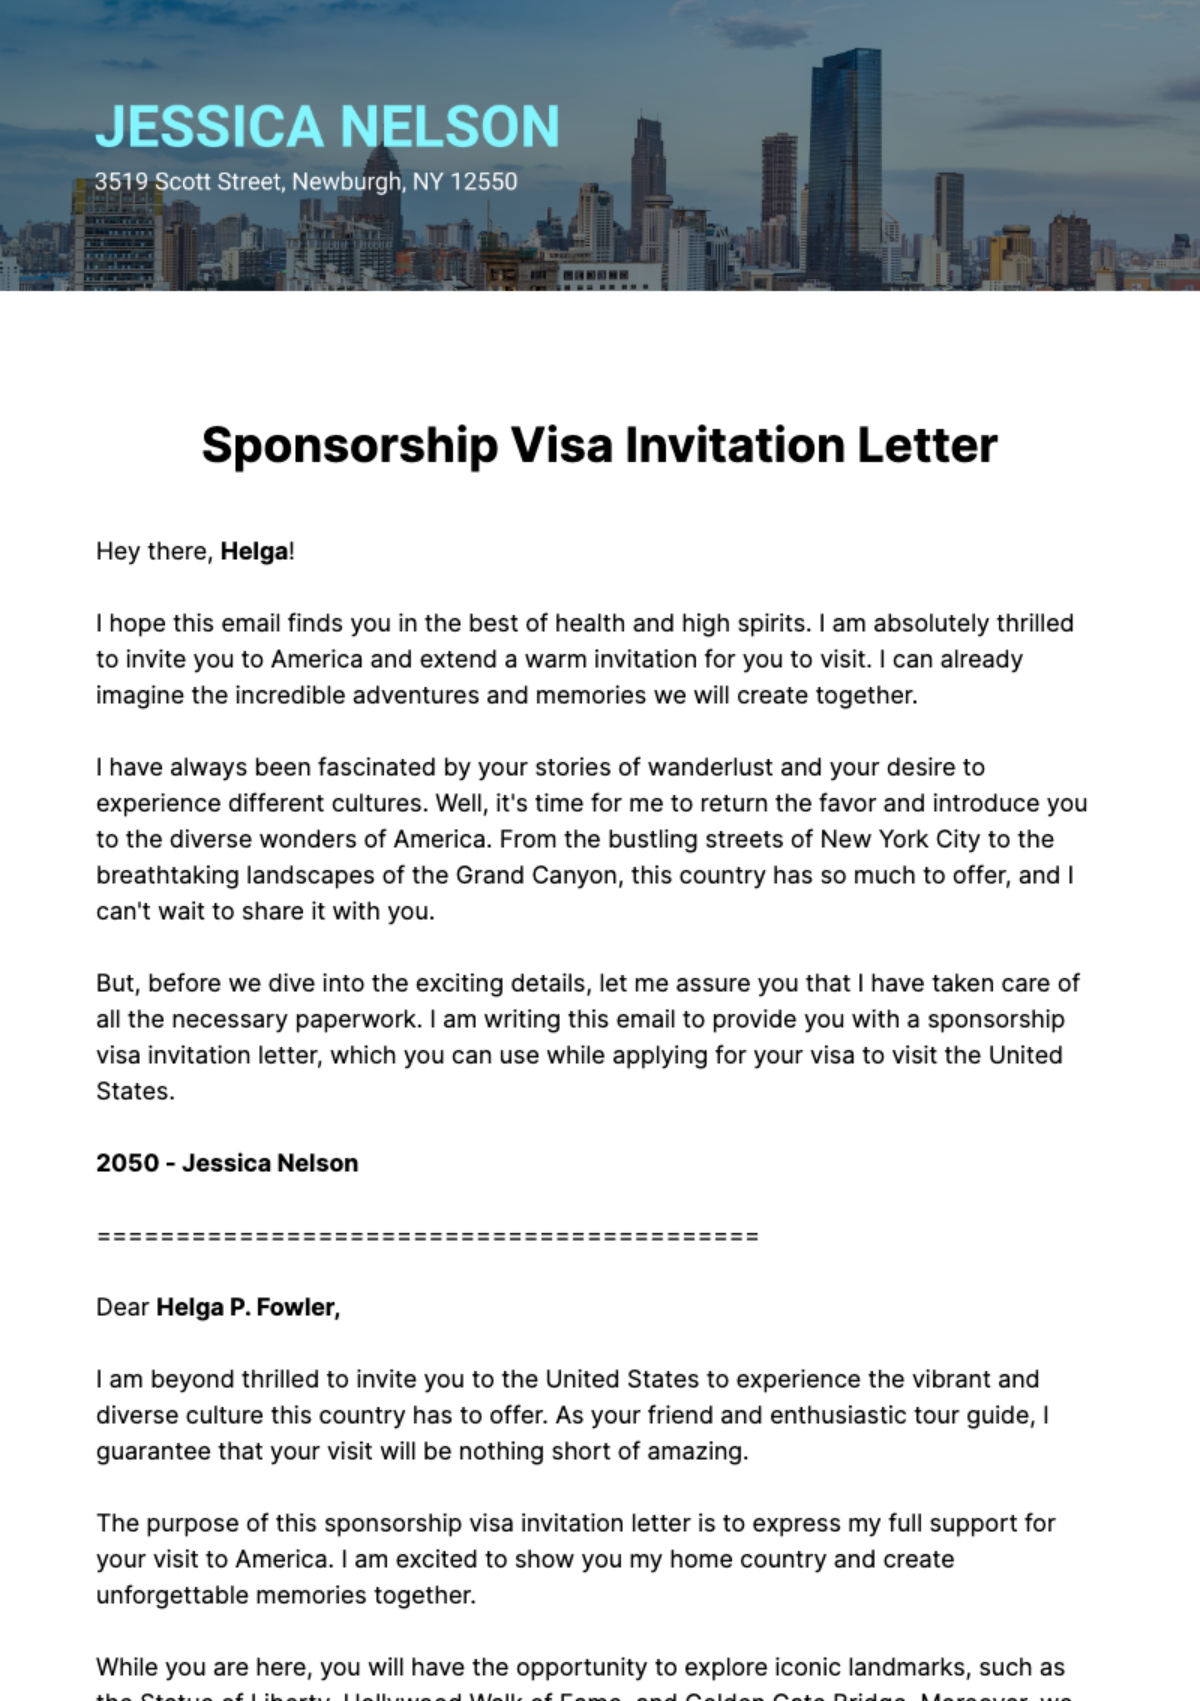 Sponsorship Visa Invitation Letter Template